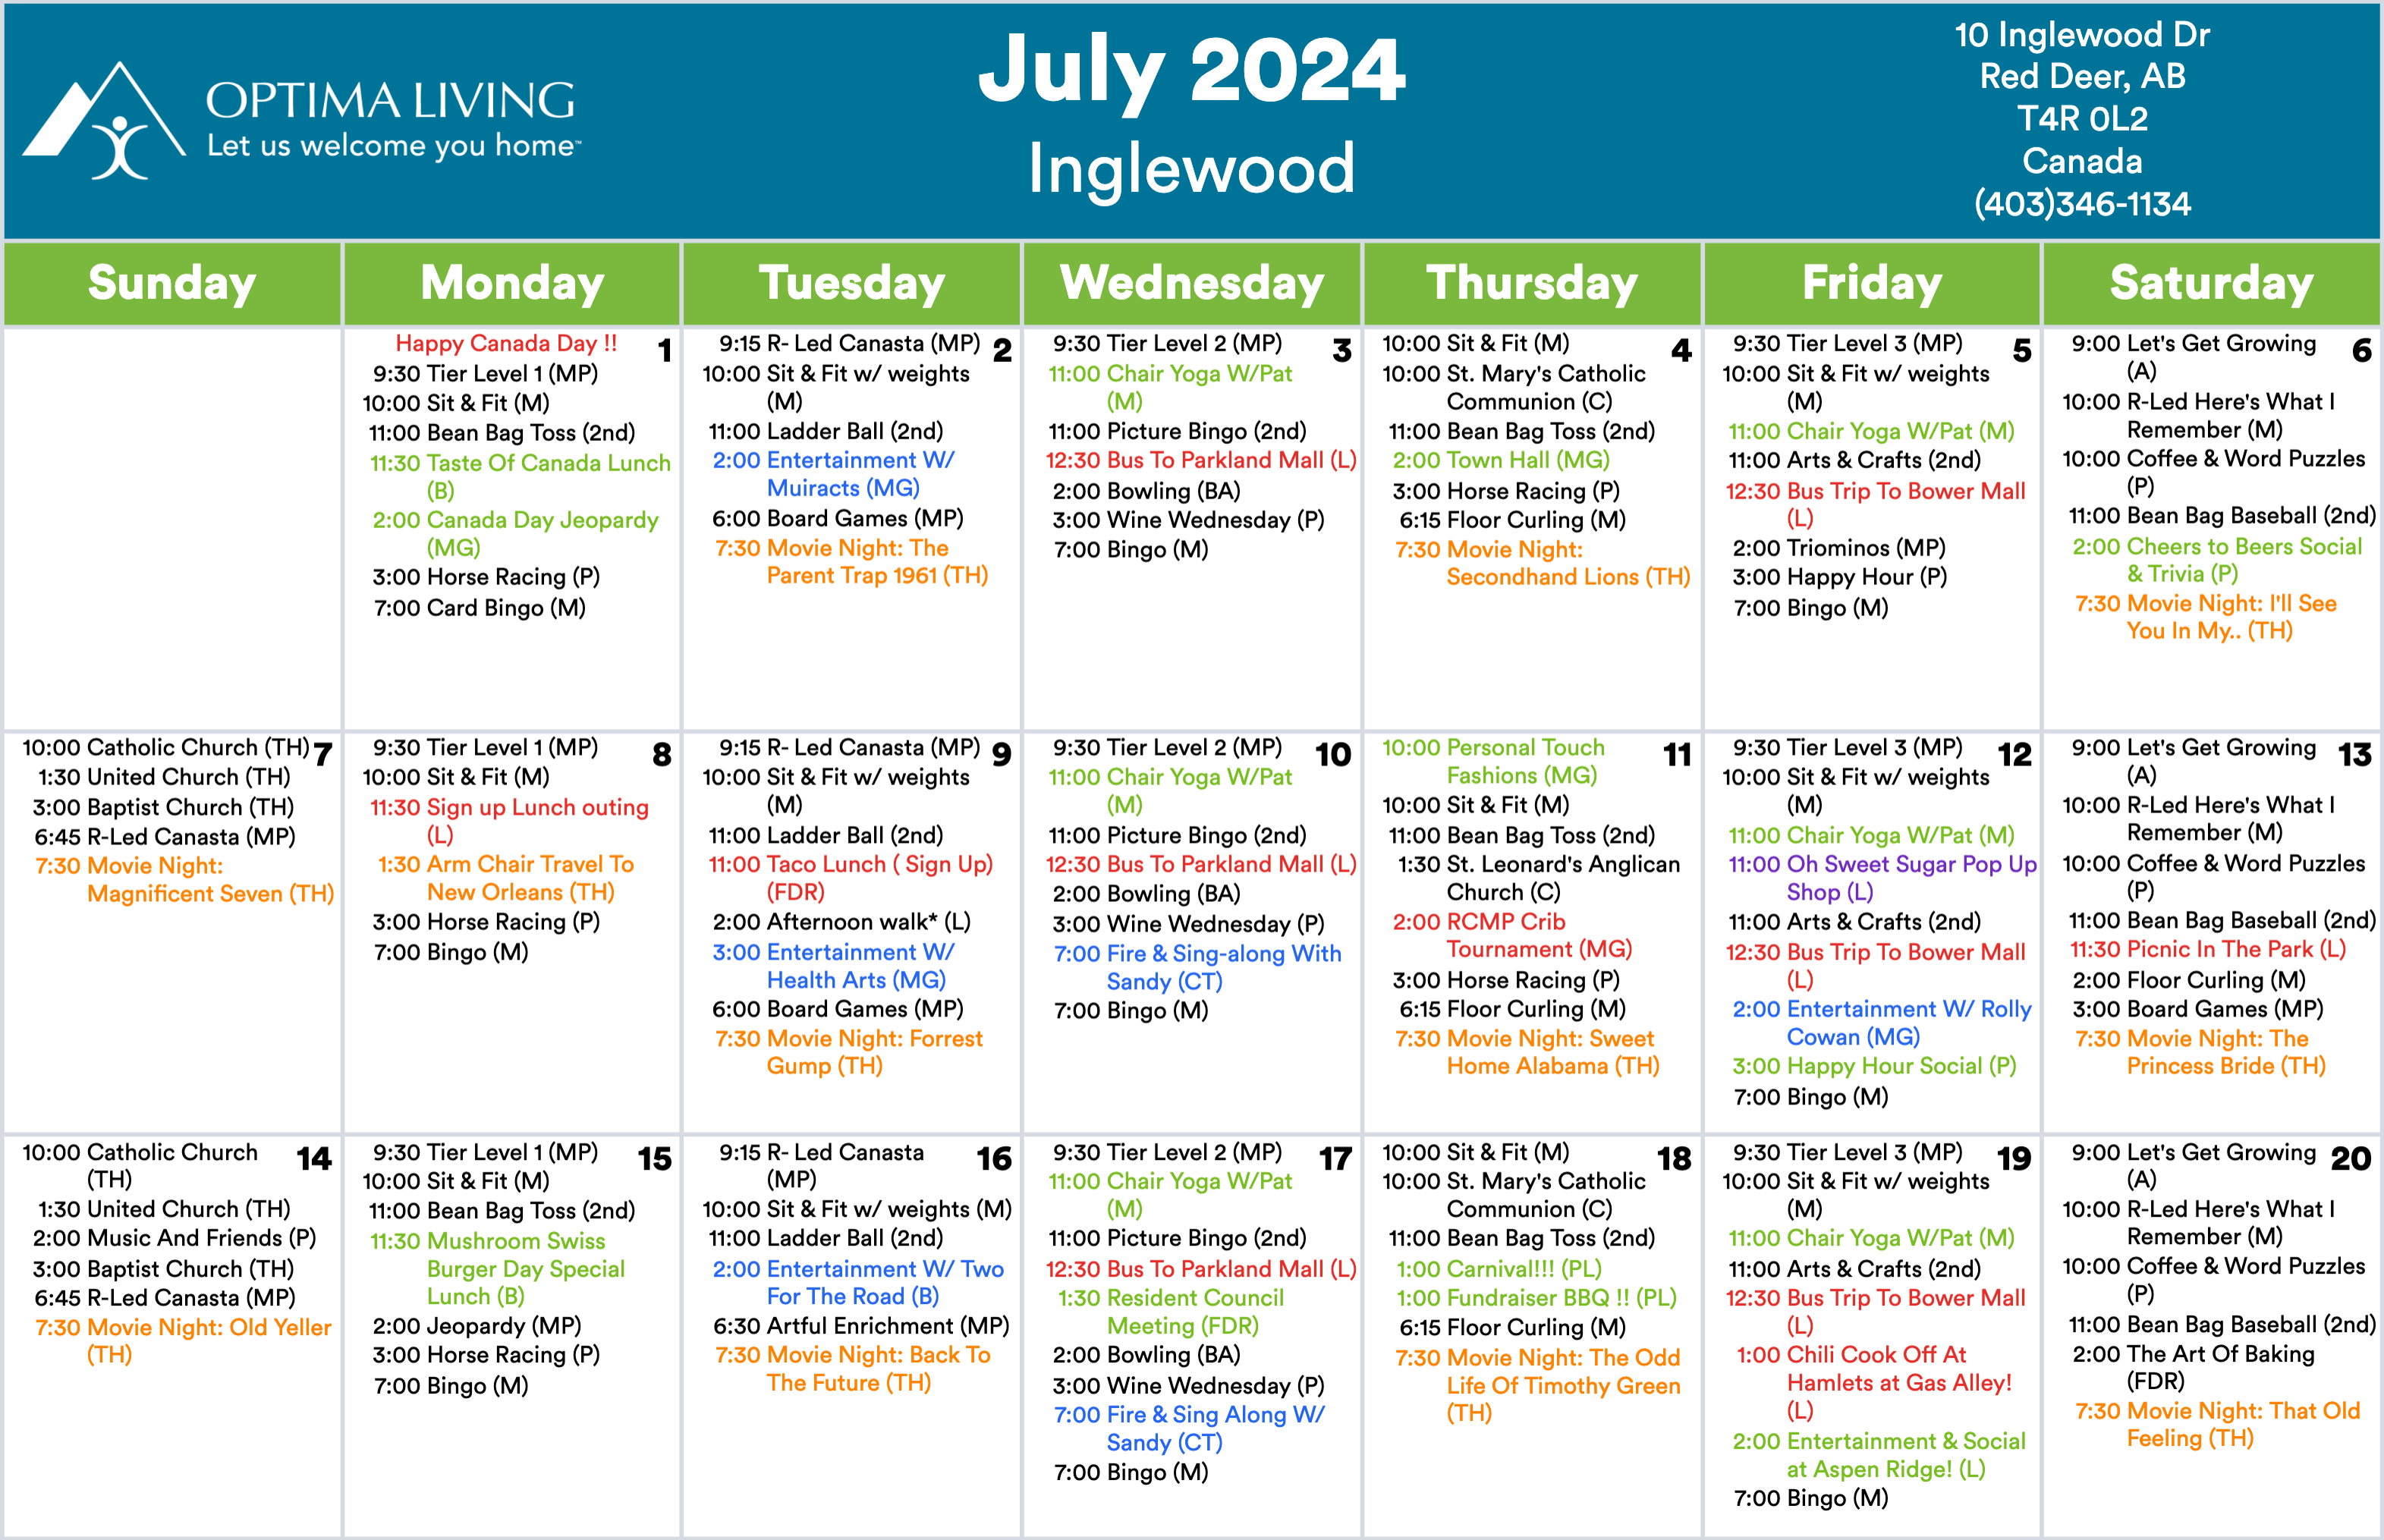 Inglewood July 1 - 20 2024 event calendar